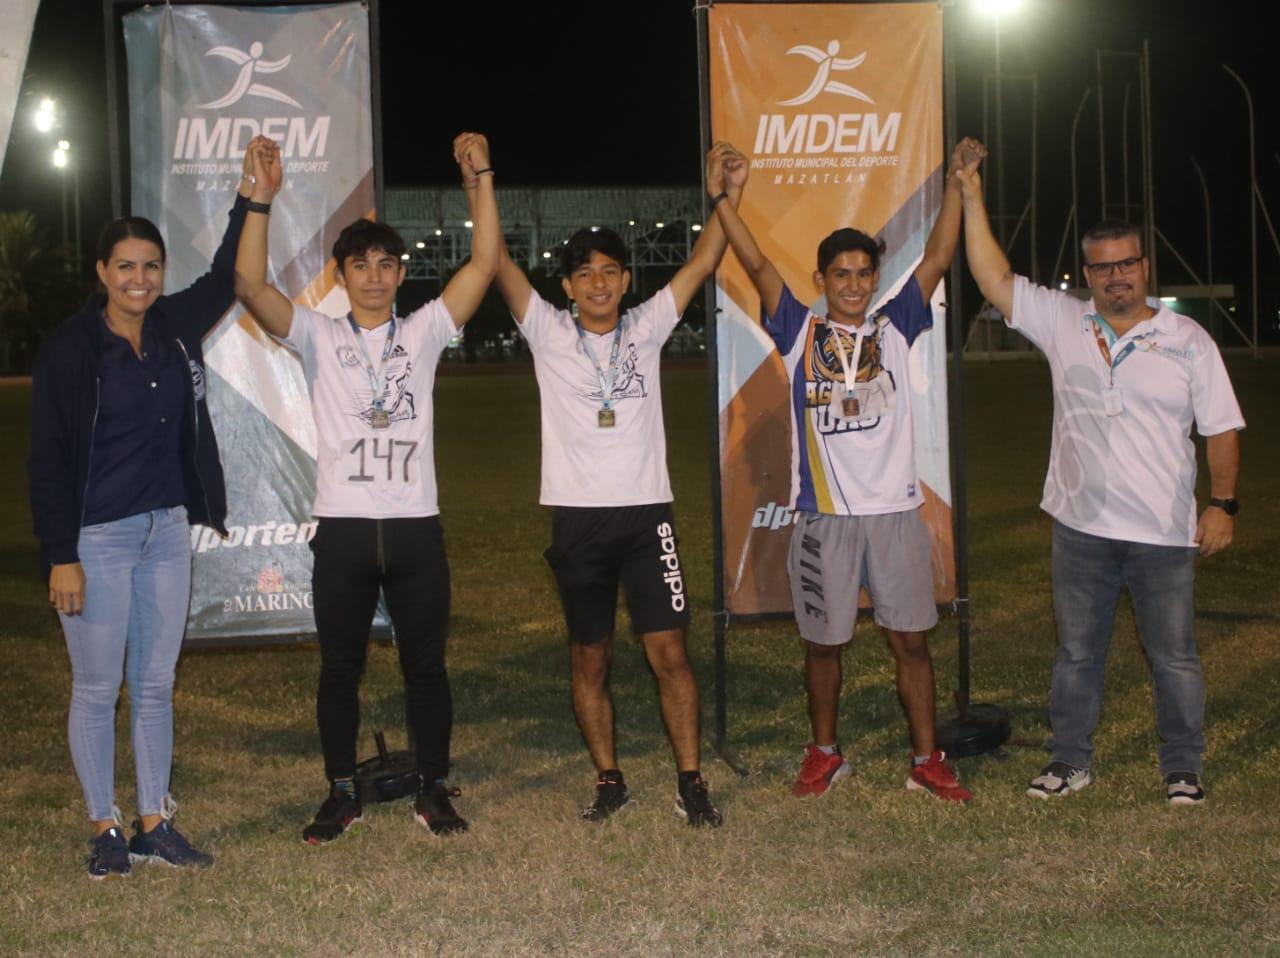 $!Jennifer Tirado y Sebastián Uribe son los vencedores de la Liga de Atletismo Imdem 2022